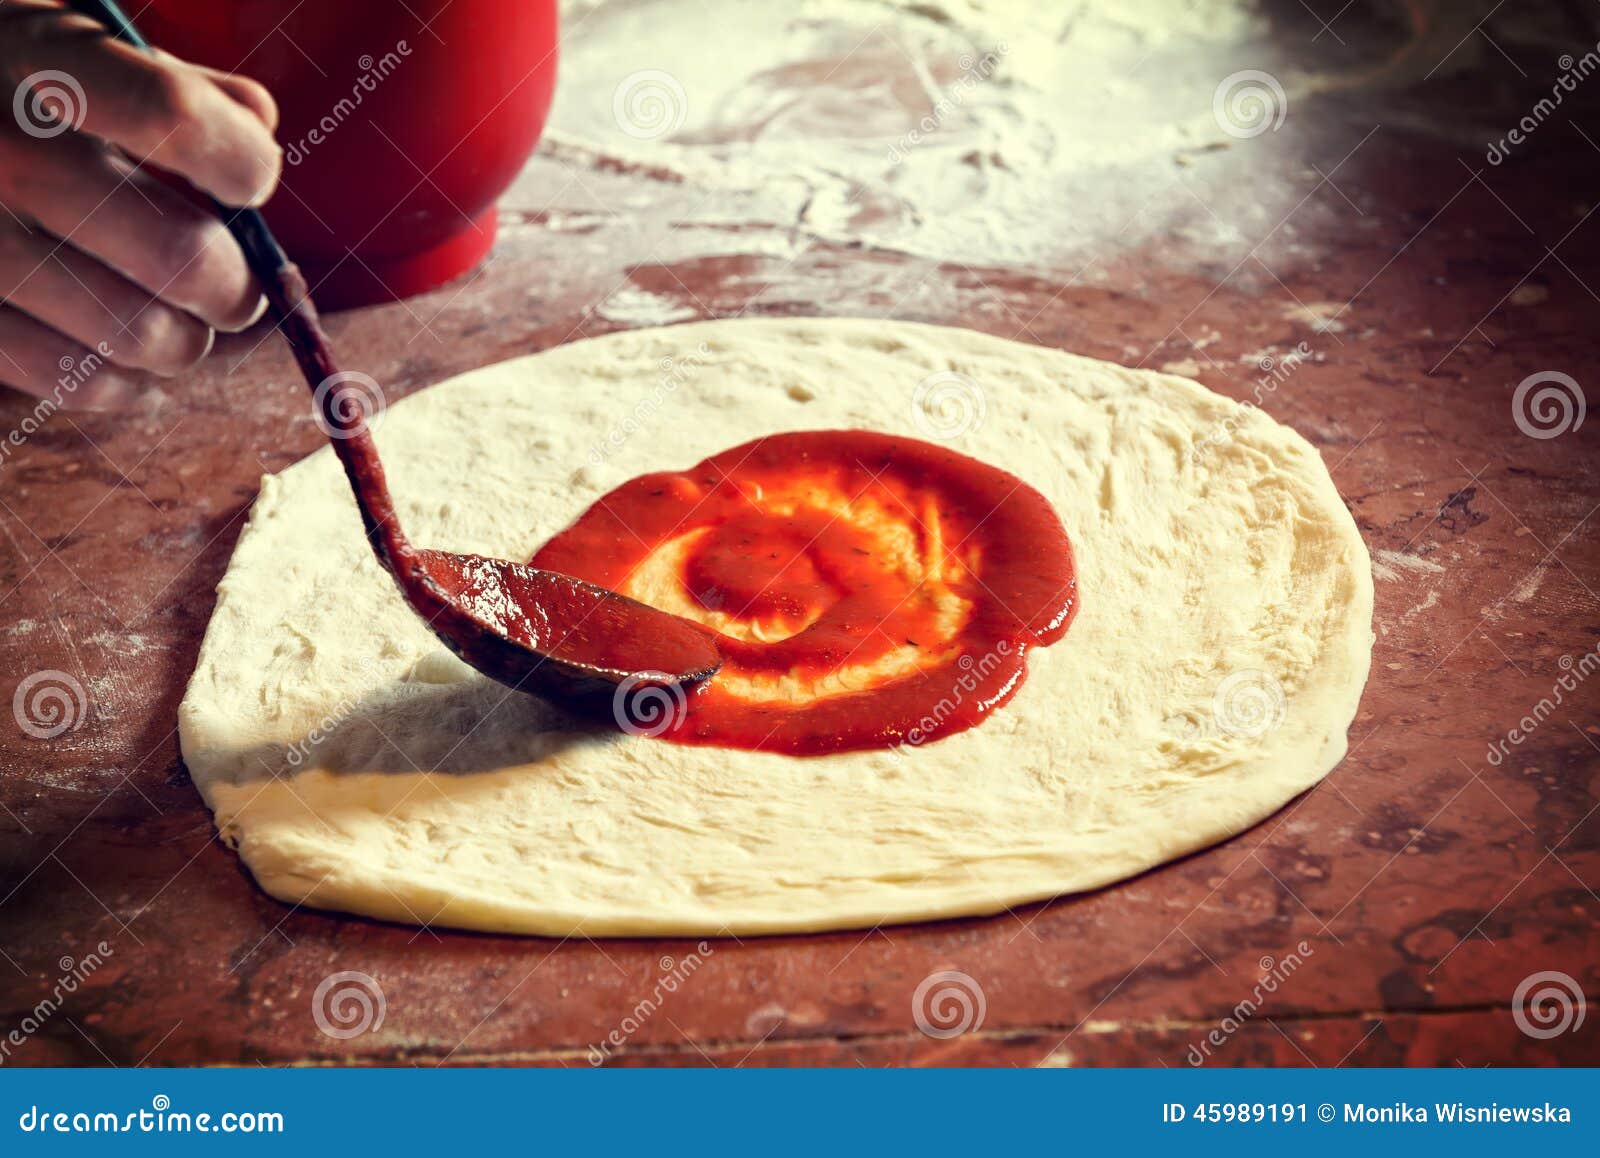 Тесто на итальянском языке. Итальянское тесто для пиццы. Pizza Dough preparation process. Pizza preparation sous. Пиццаретта еда.